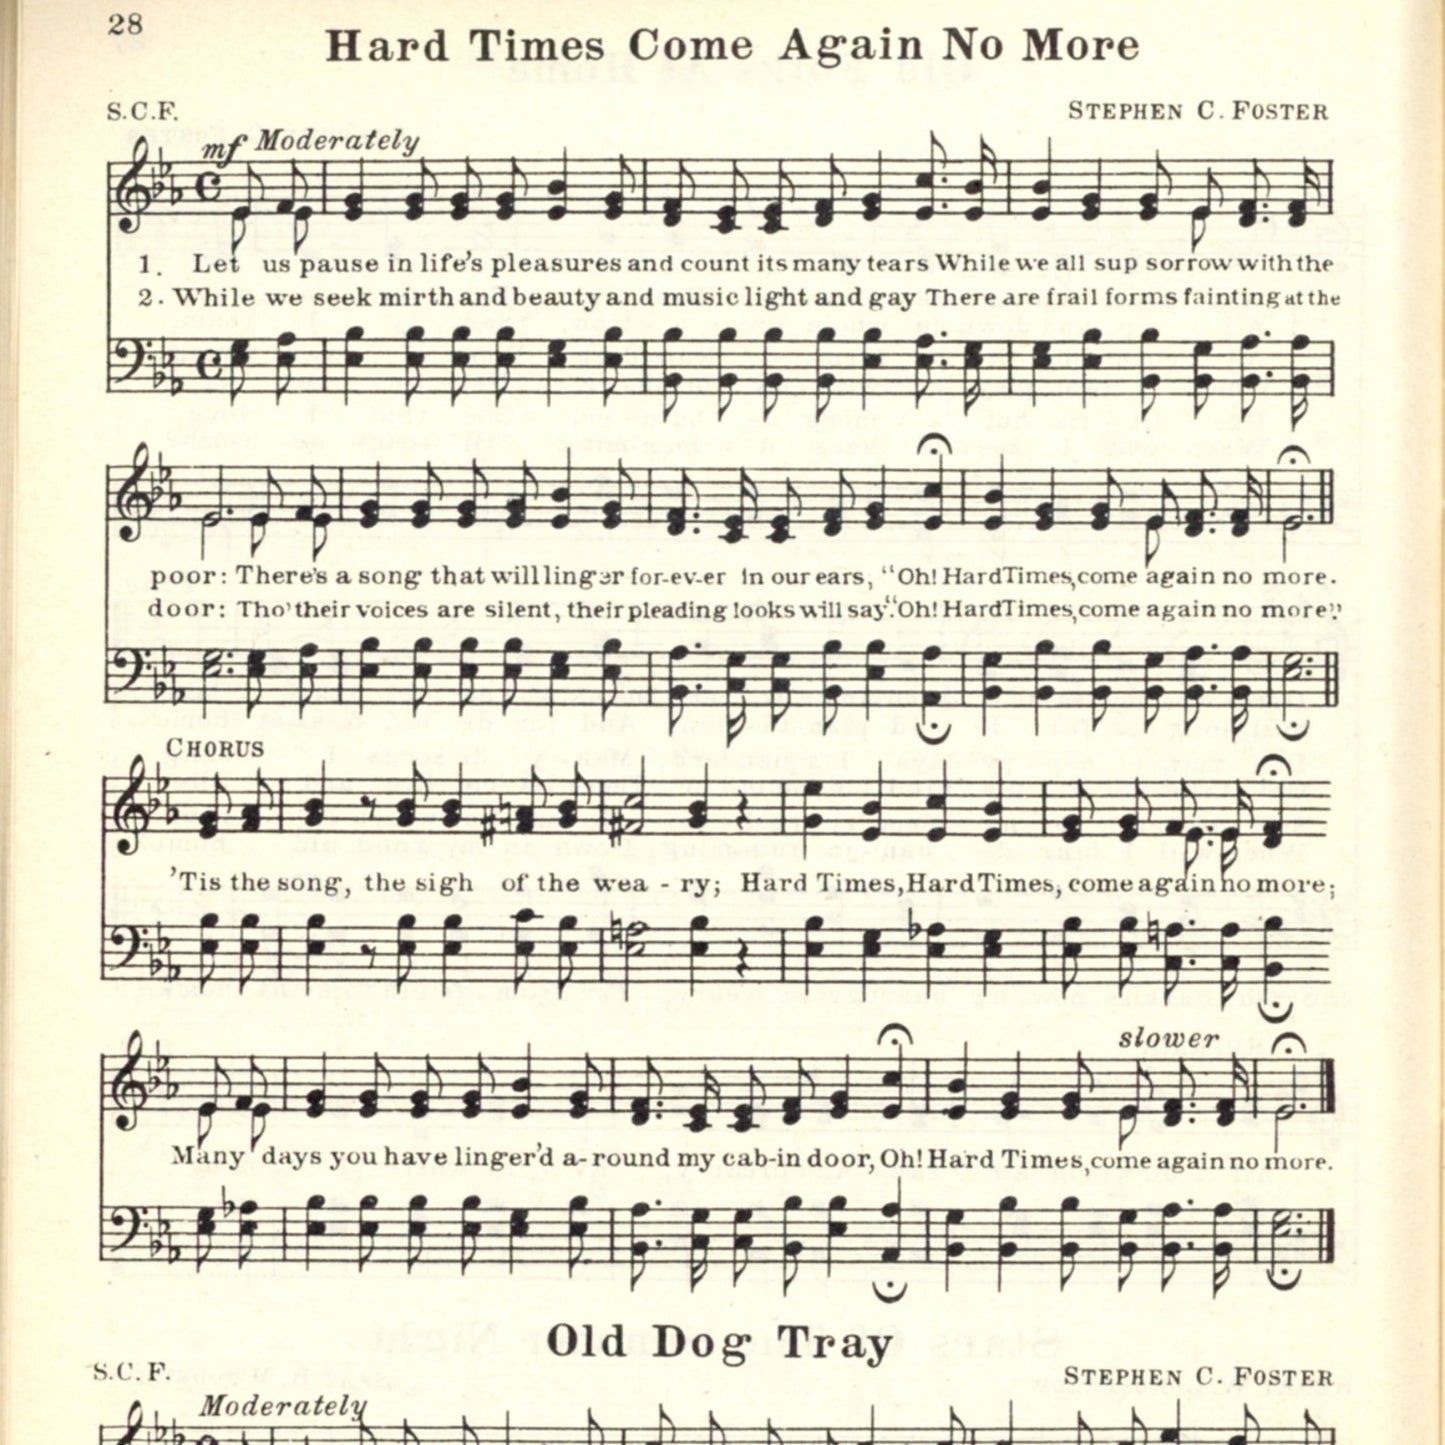 THE GOLDEN BOOK OF FAVORITE SONGS Revised & Enlarged | John W. Beattie @1915, 1923